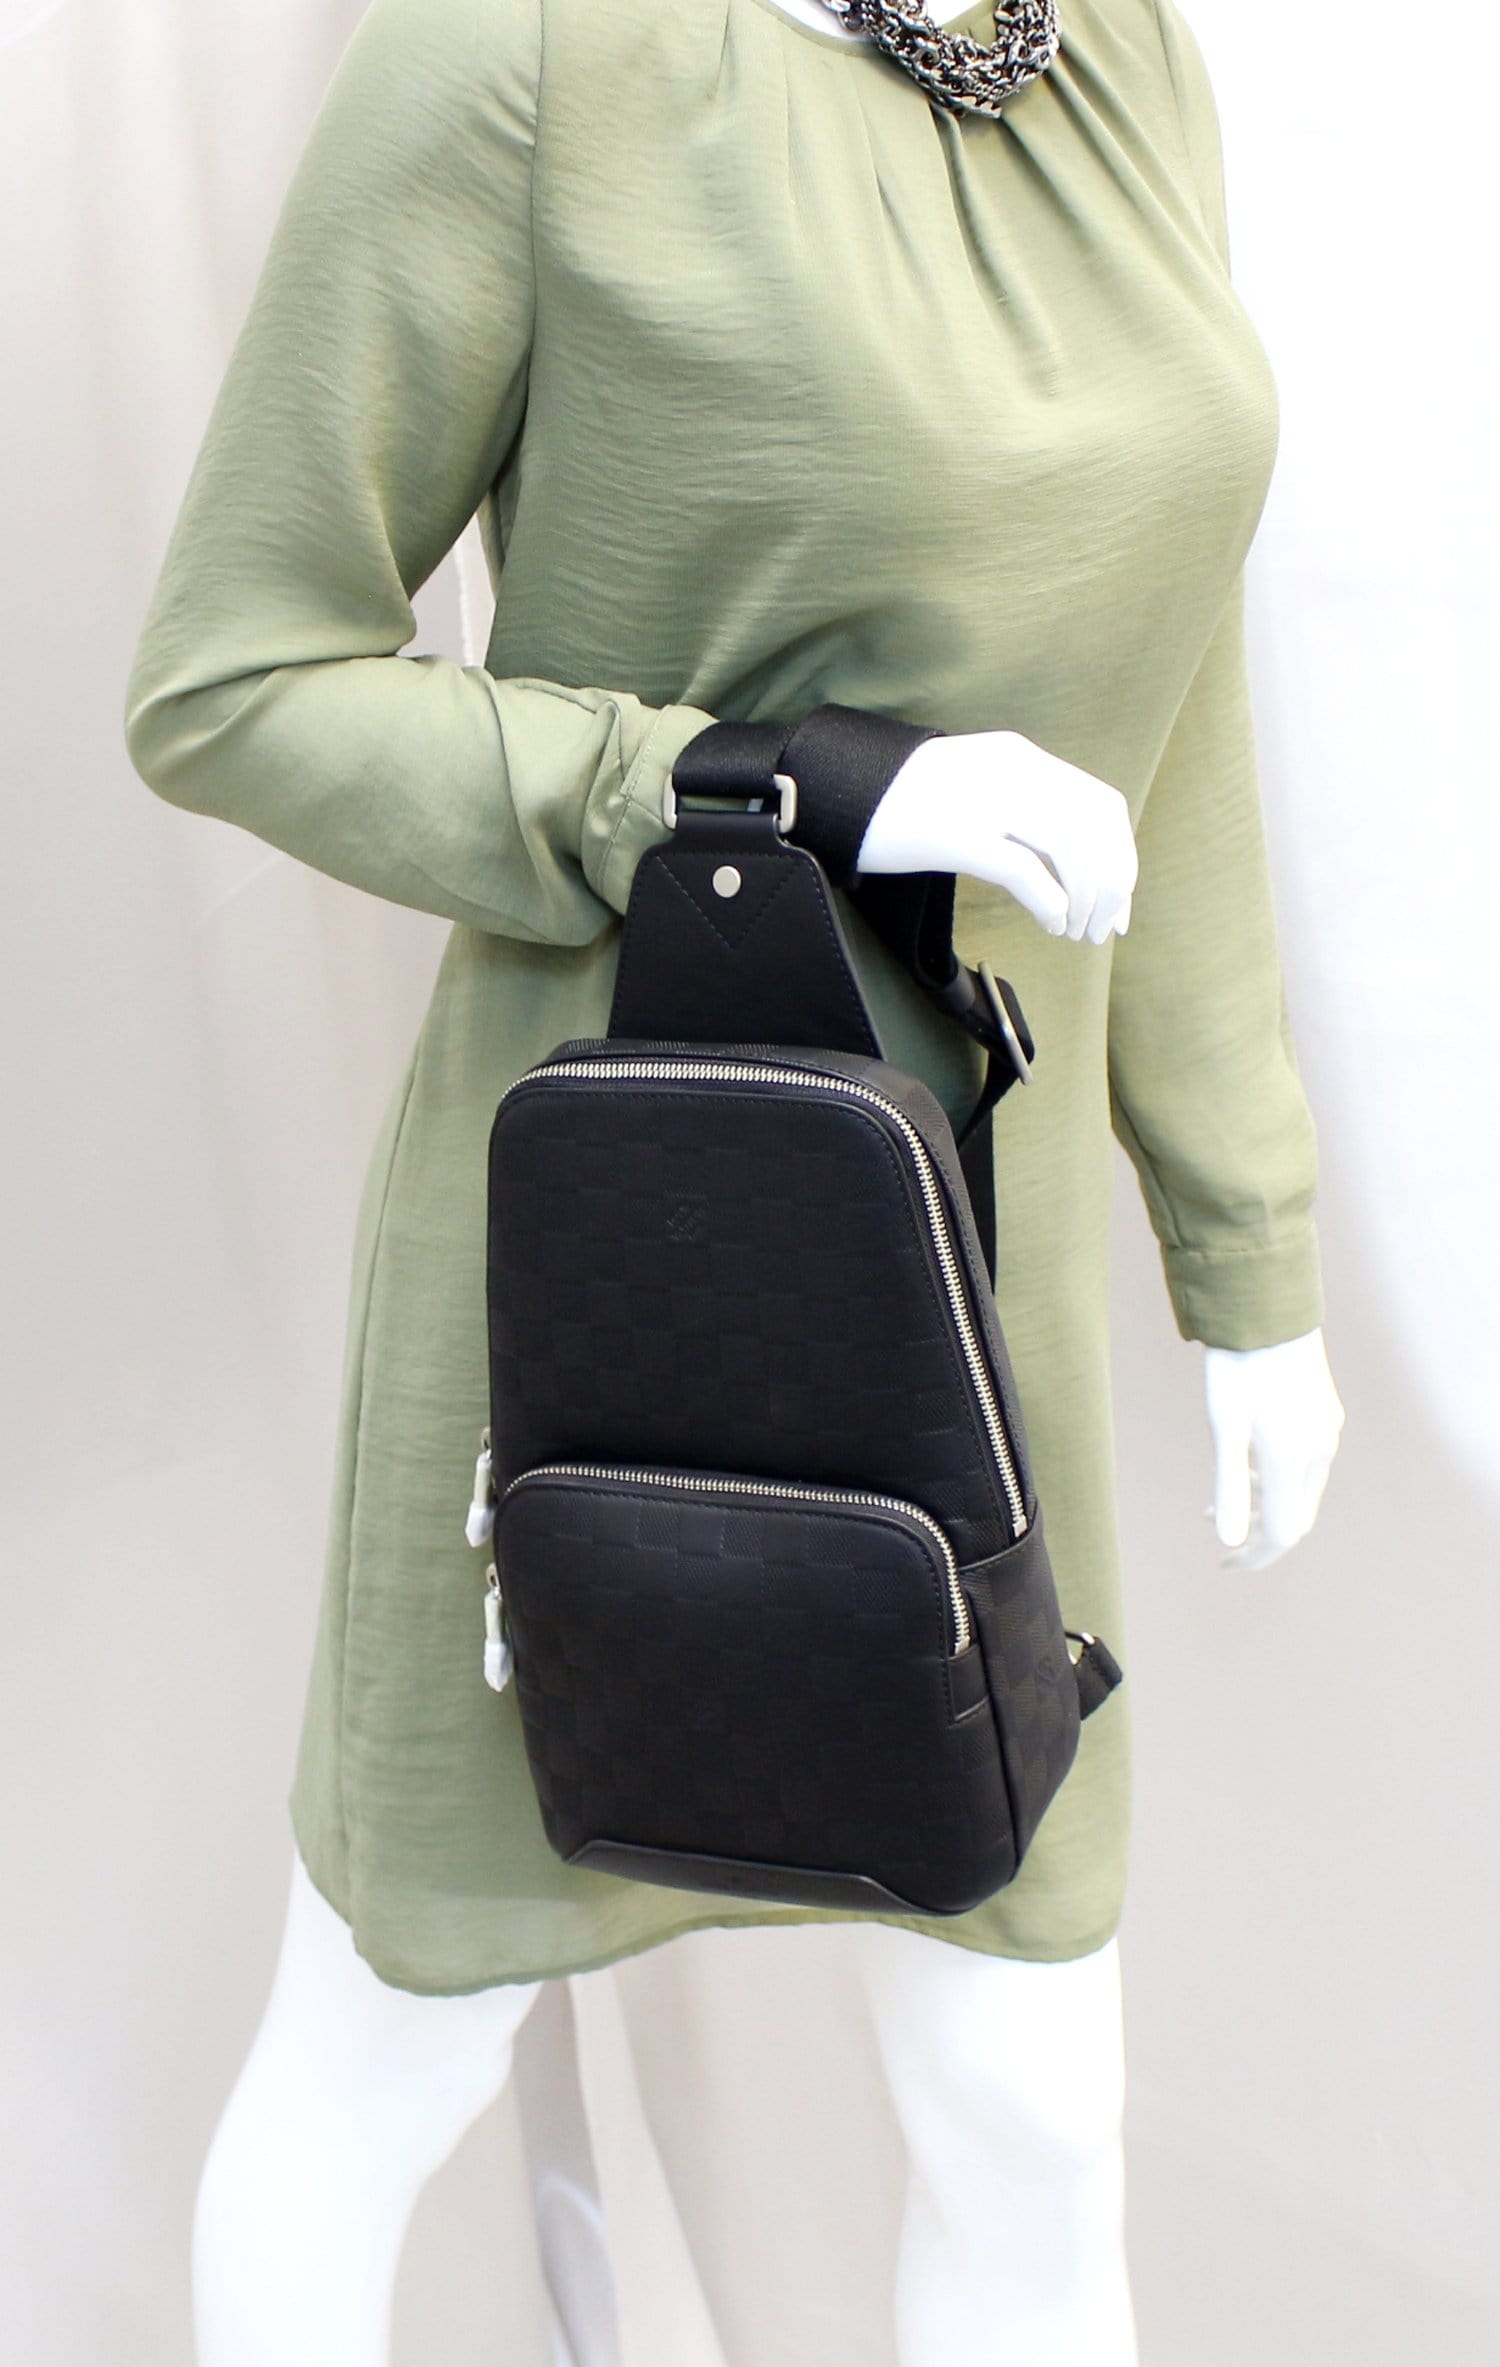 Louis Vuitton Avenue Sling Bag Men Backpacks (Damier Infini